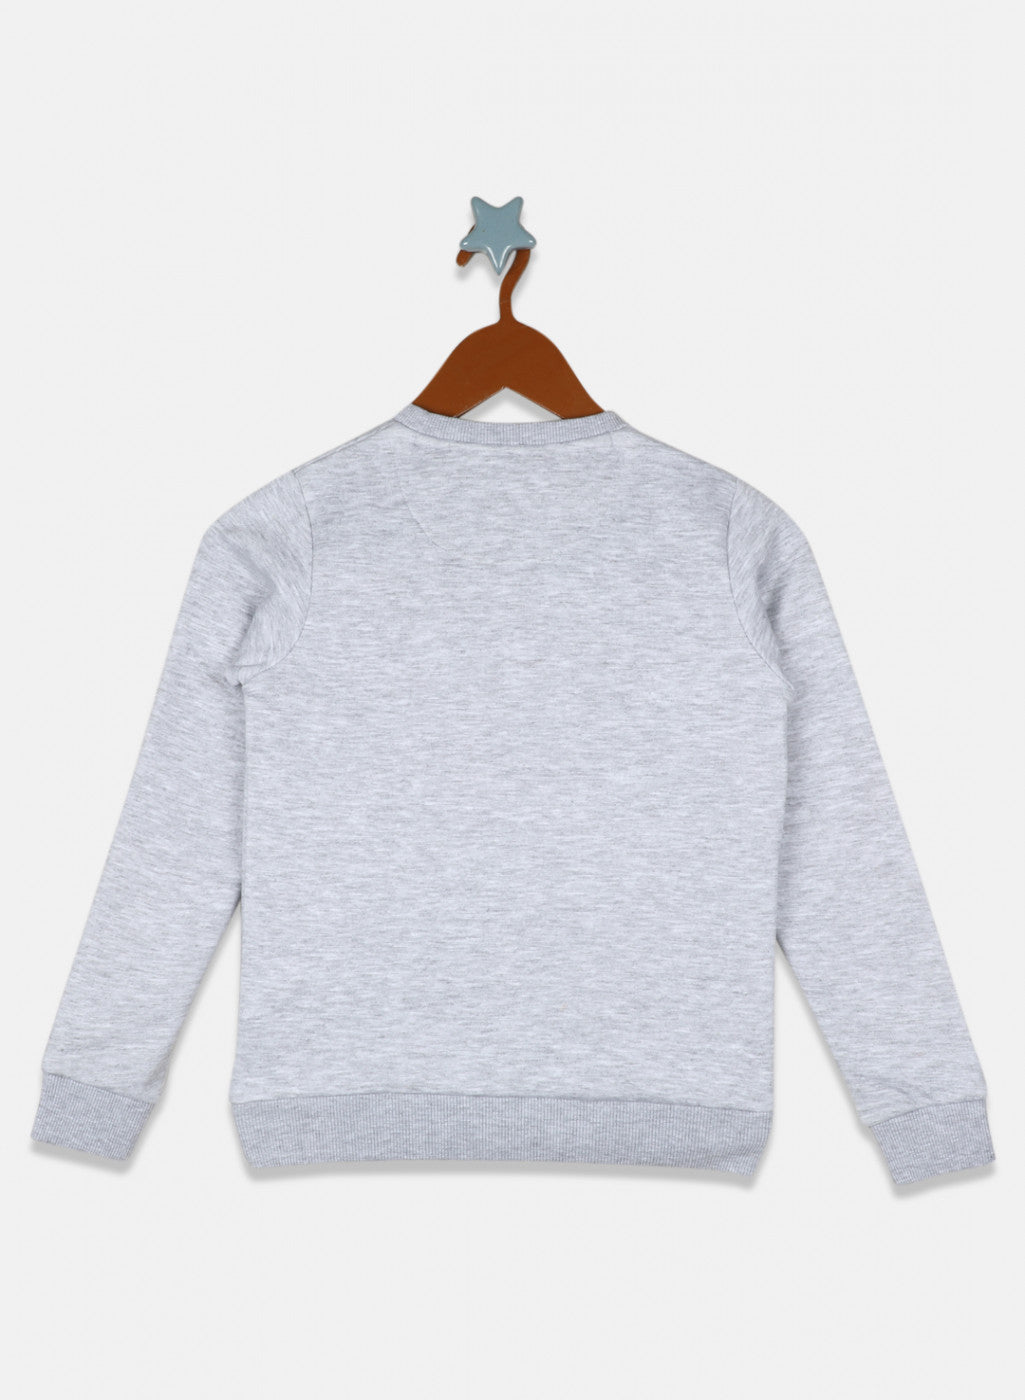 Girls Grey Printed Sweatshirt